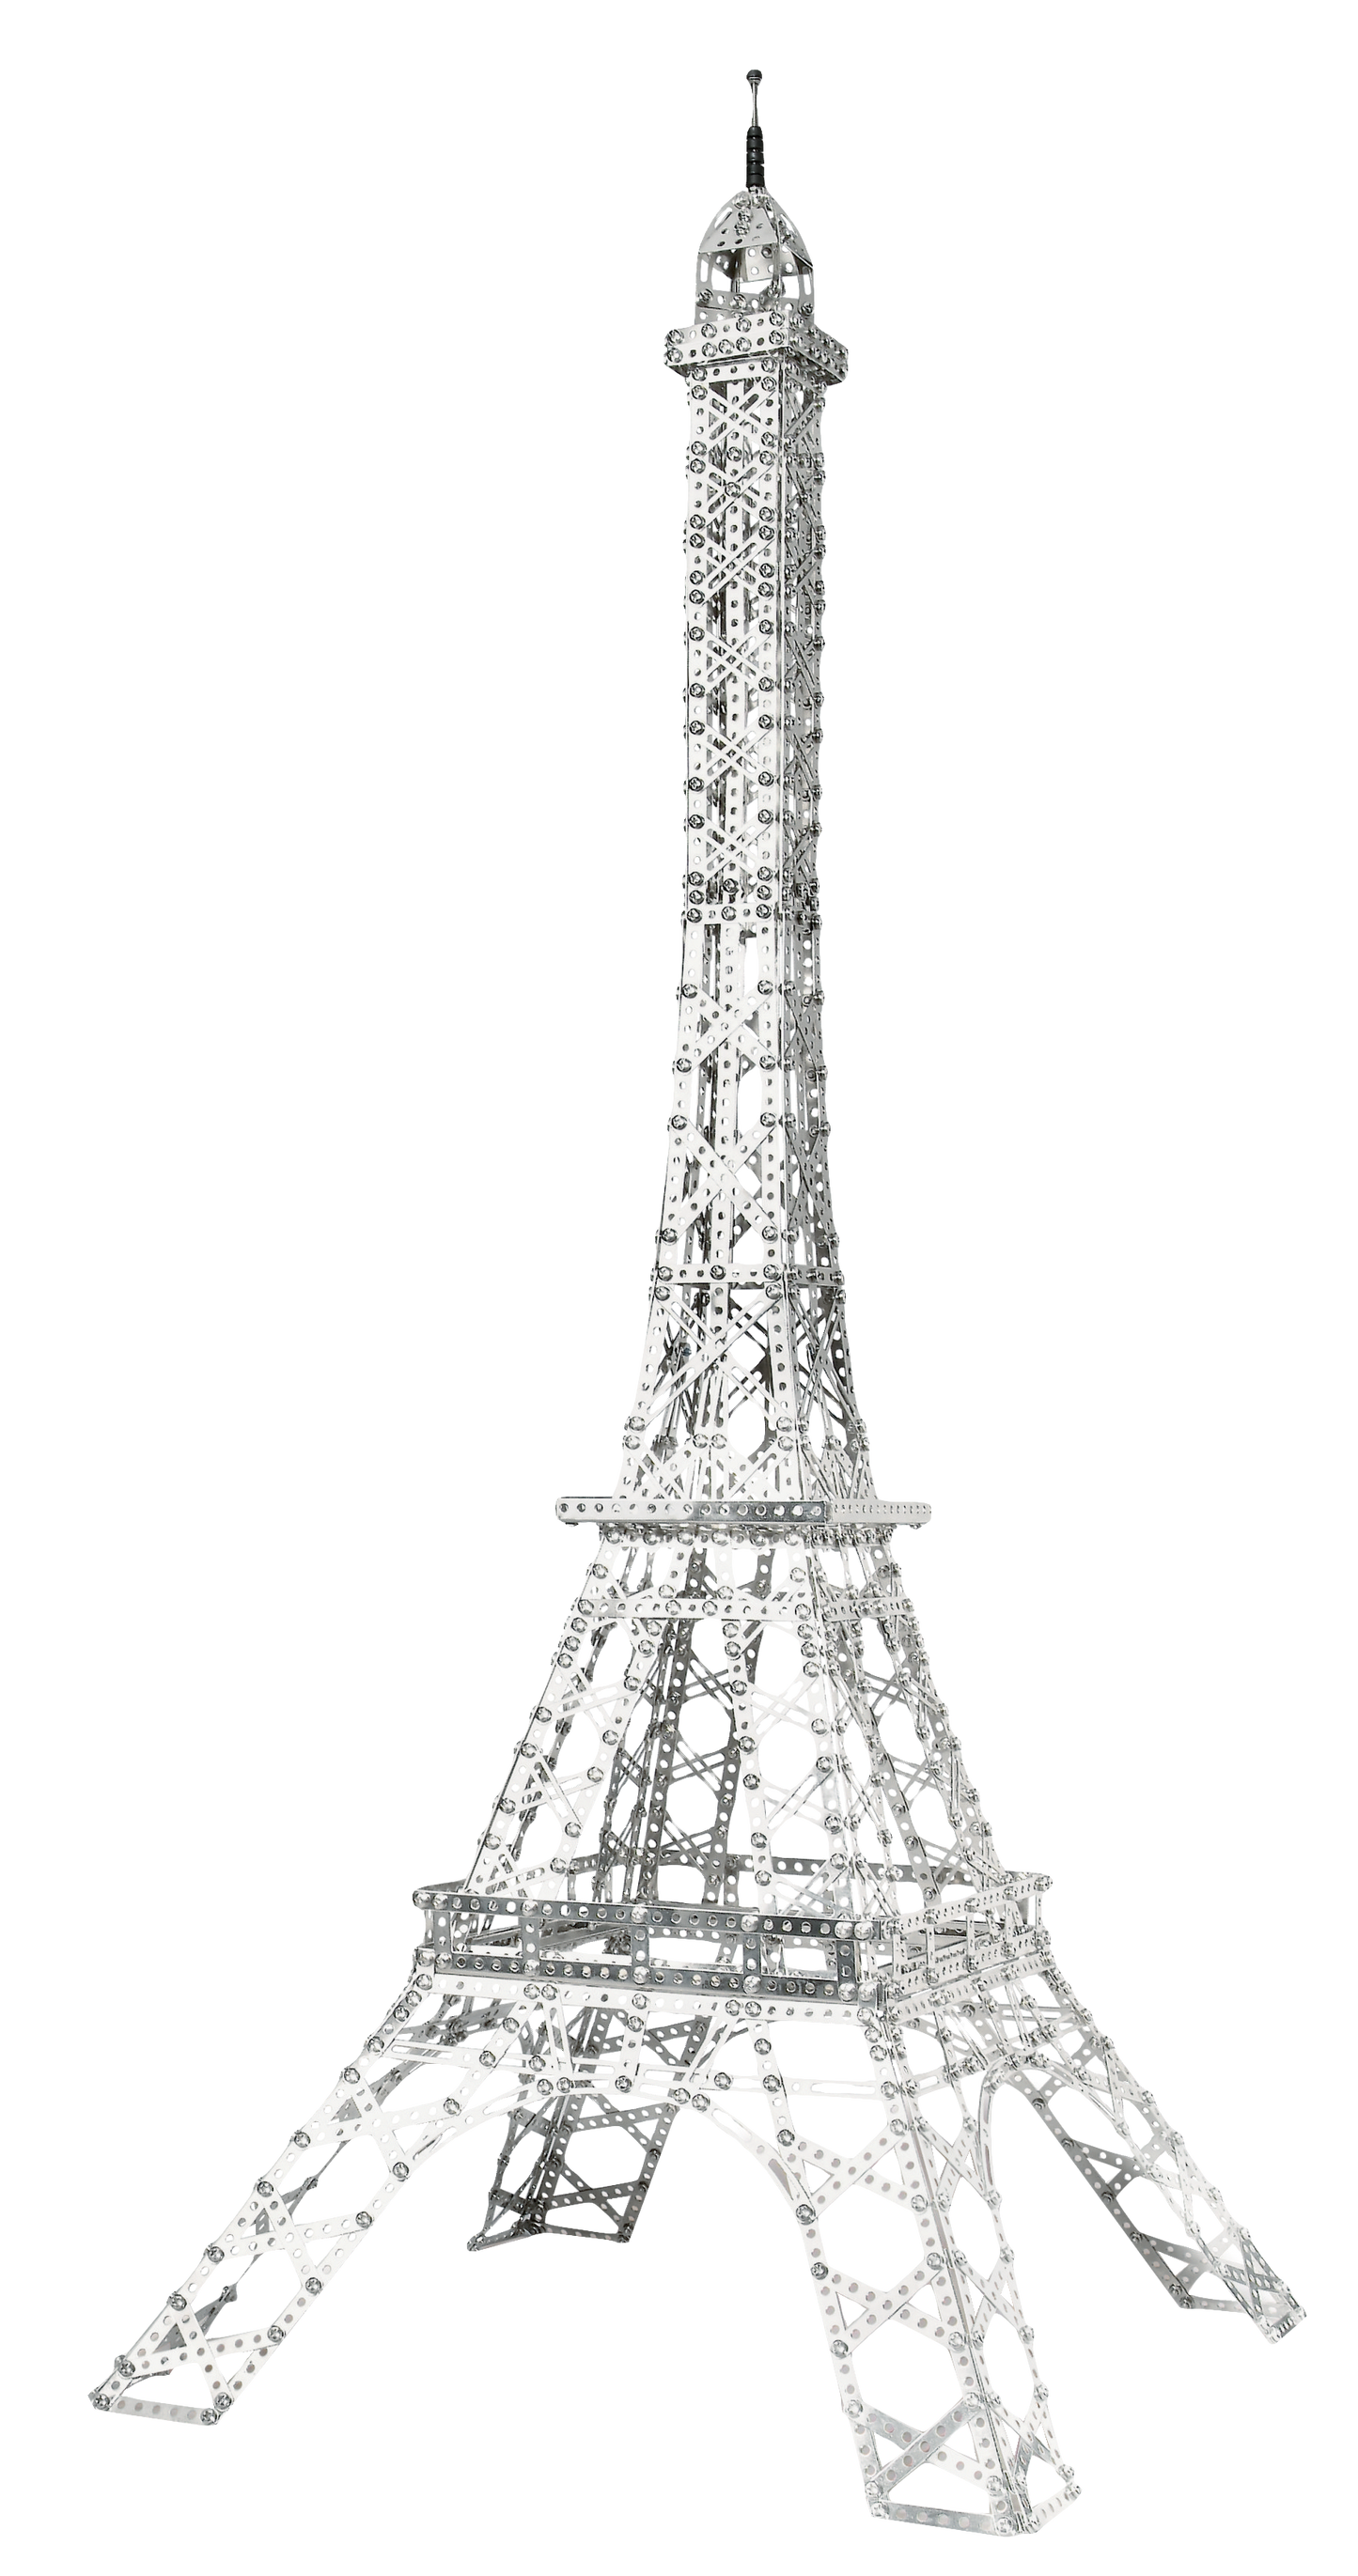 Eitech Landmark Series Deluxe Eiffel Tower with 6 Meter White Light Rope Bundle